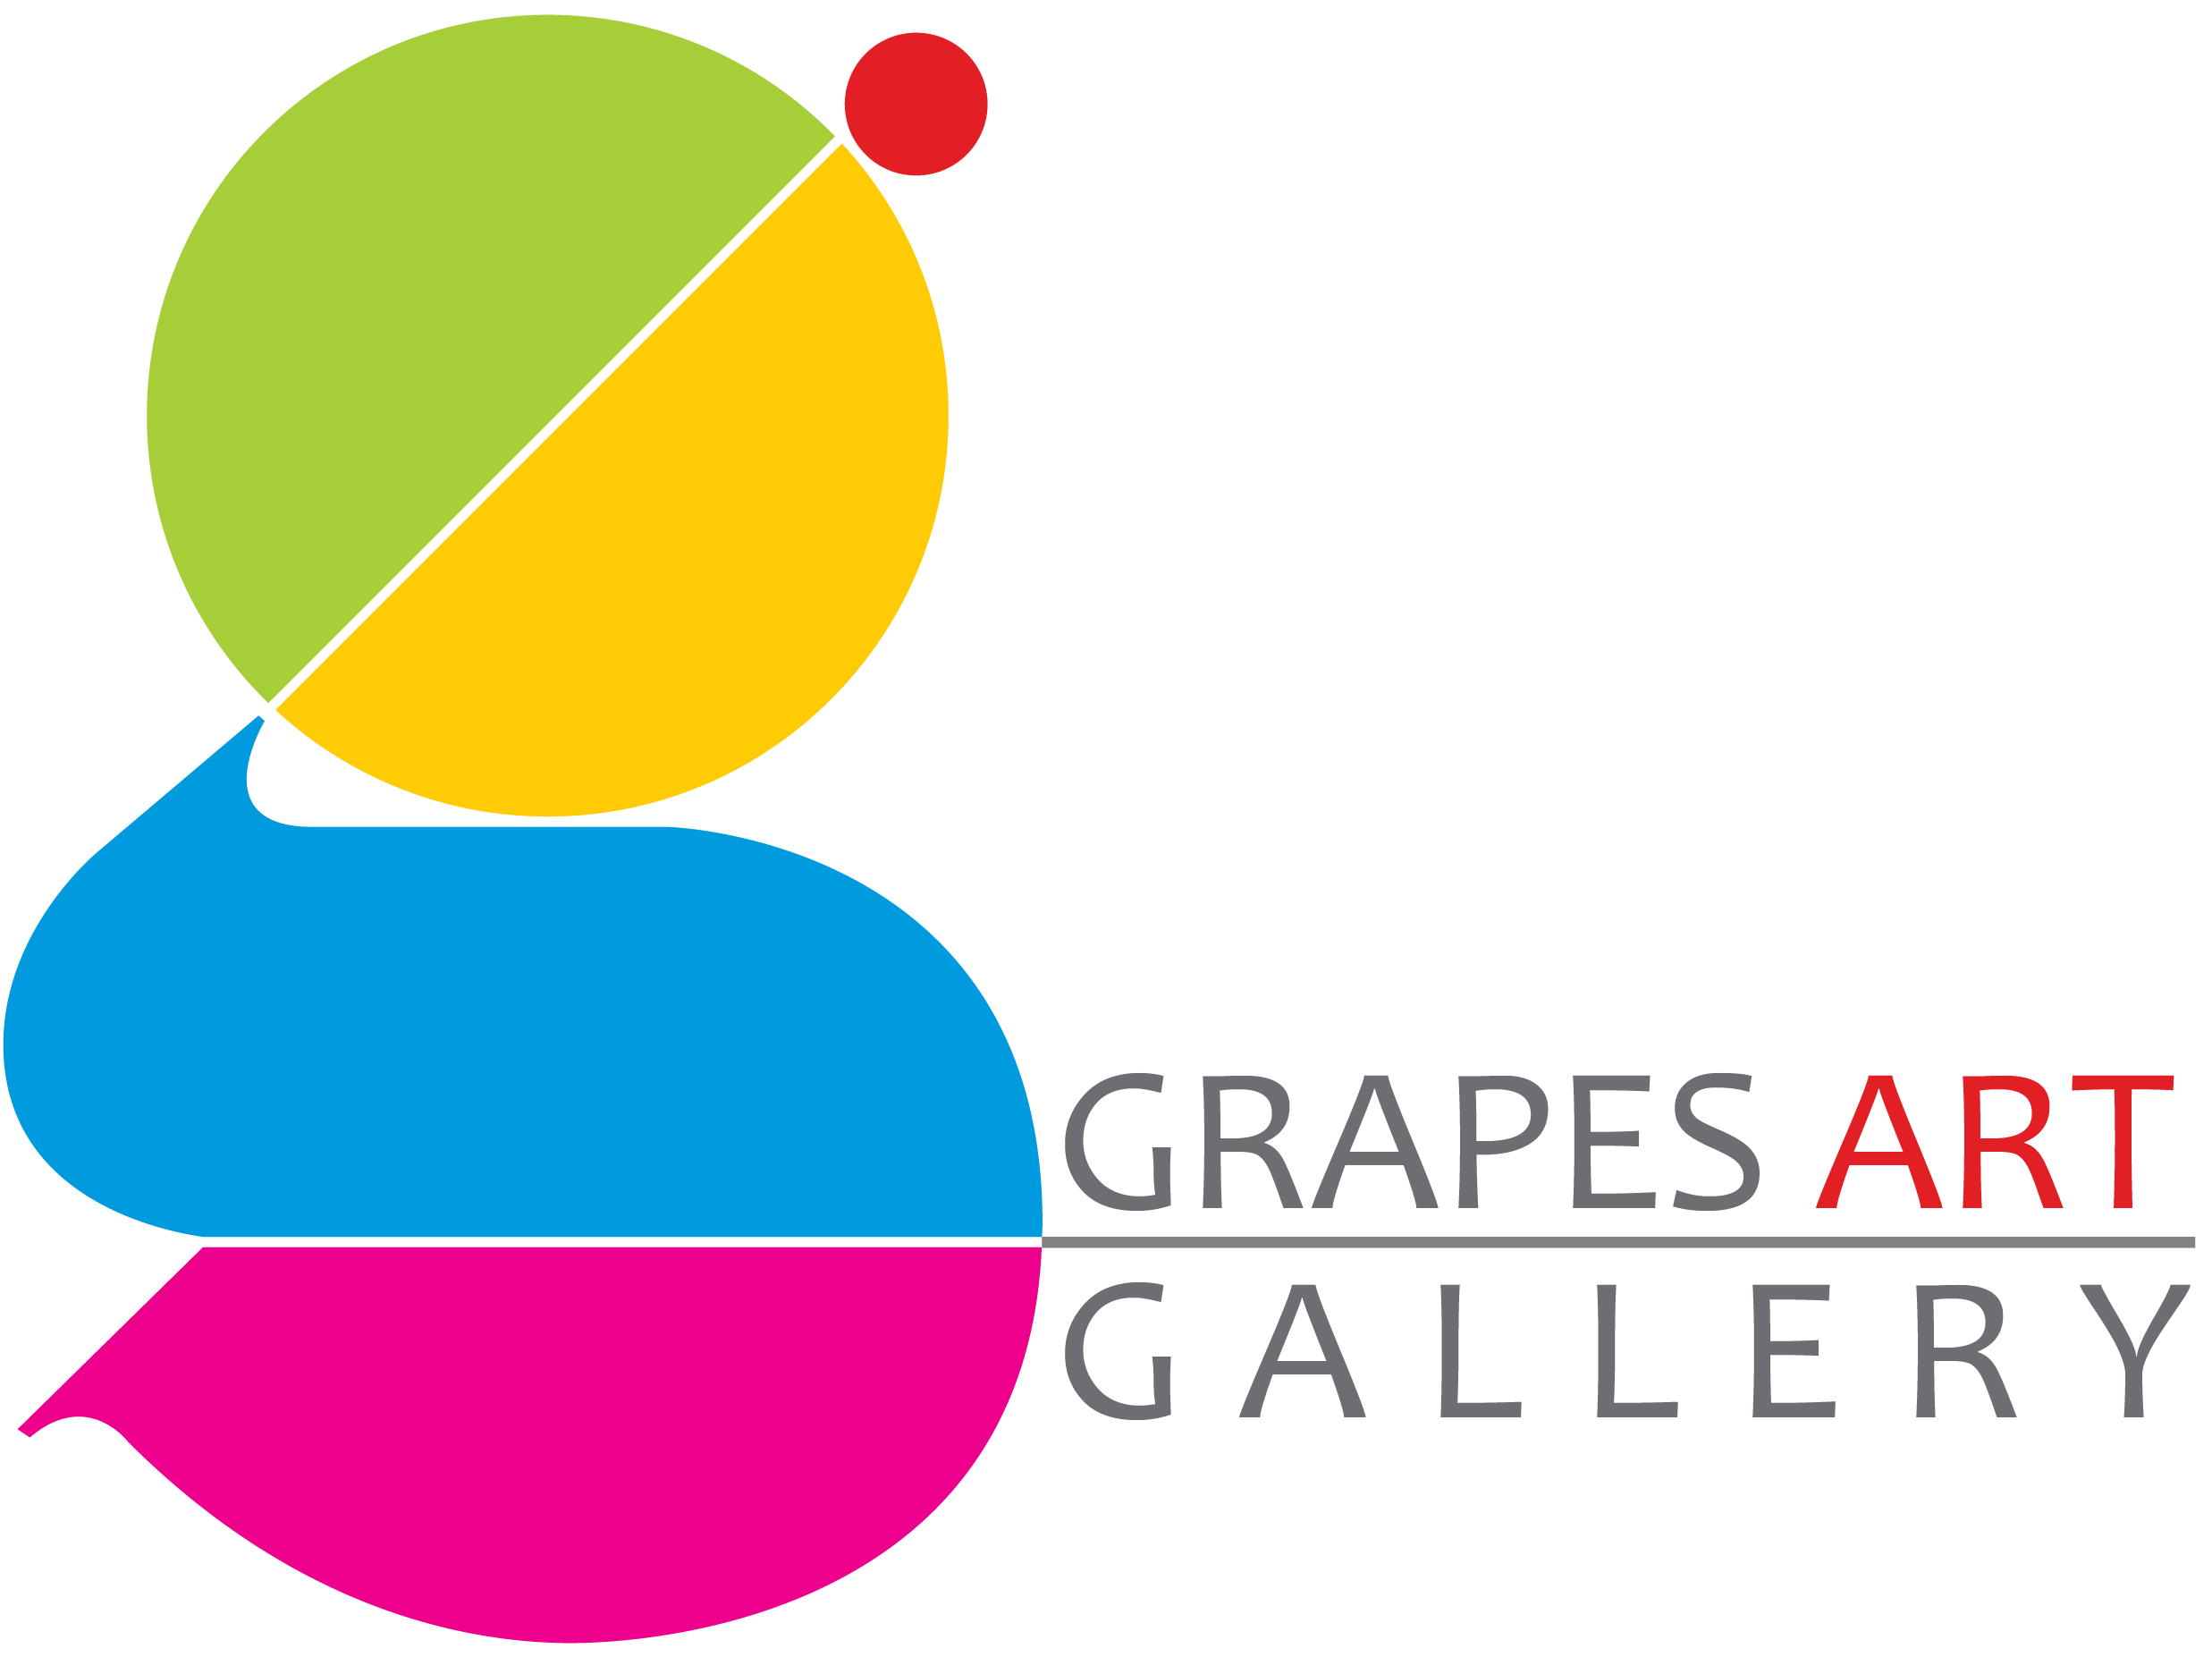 Grapes Art Gallery